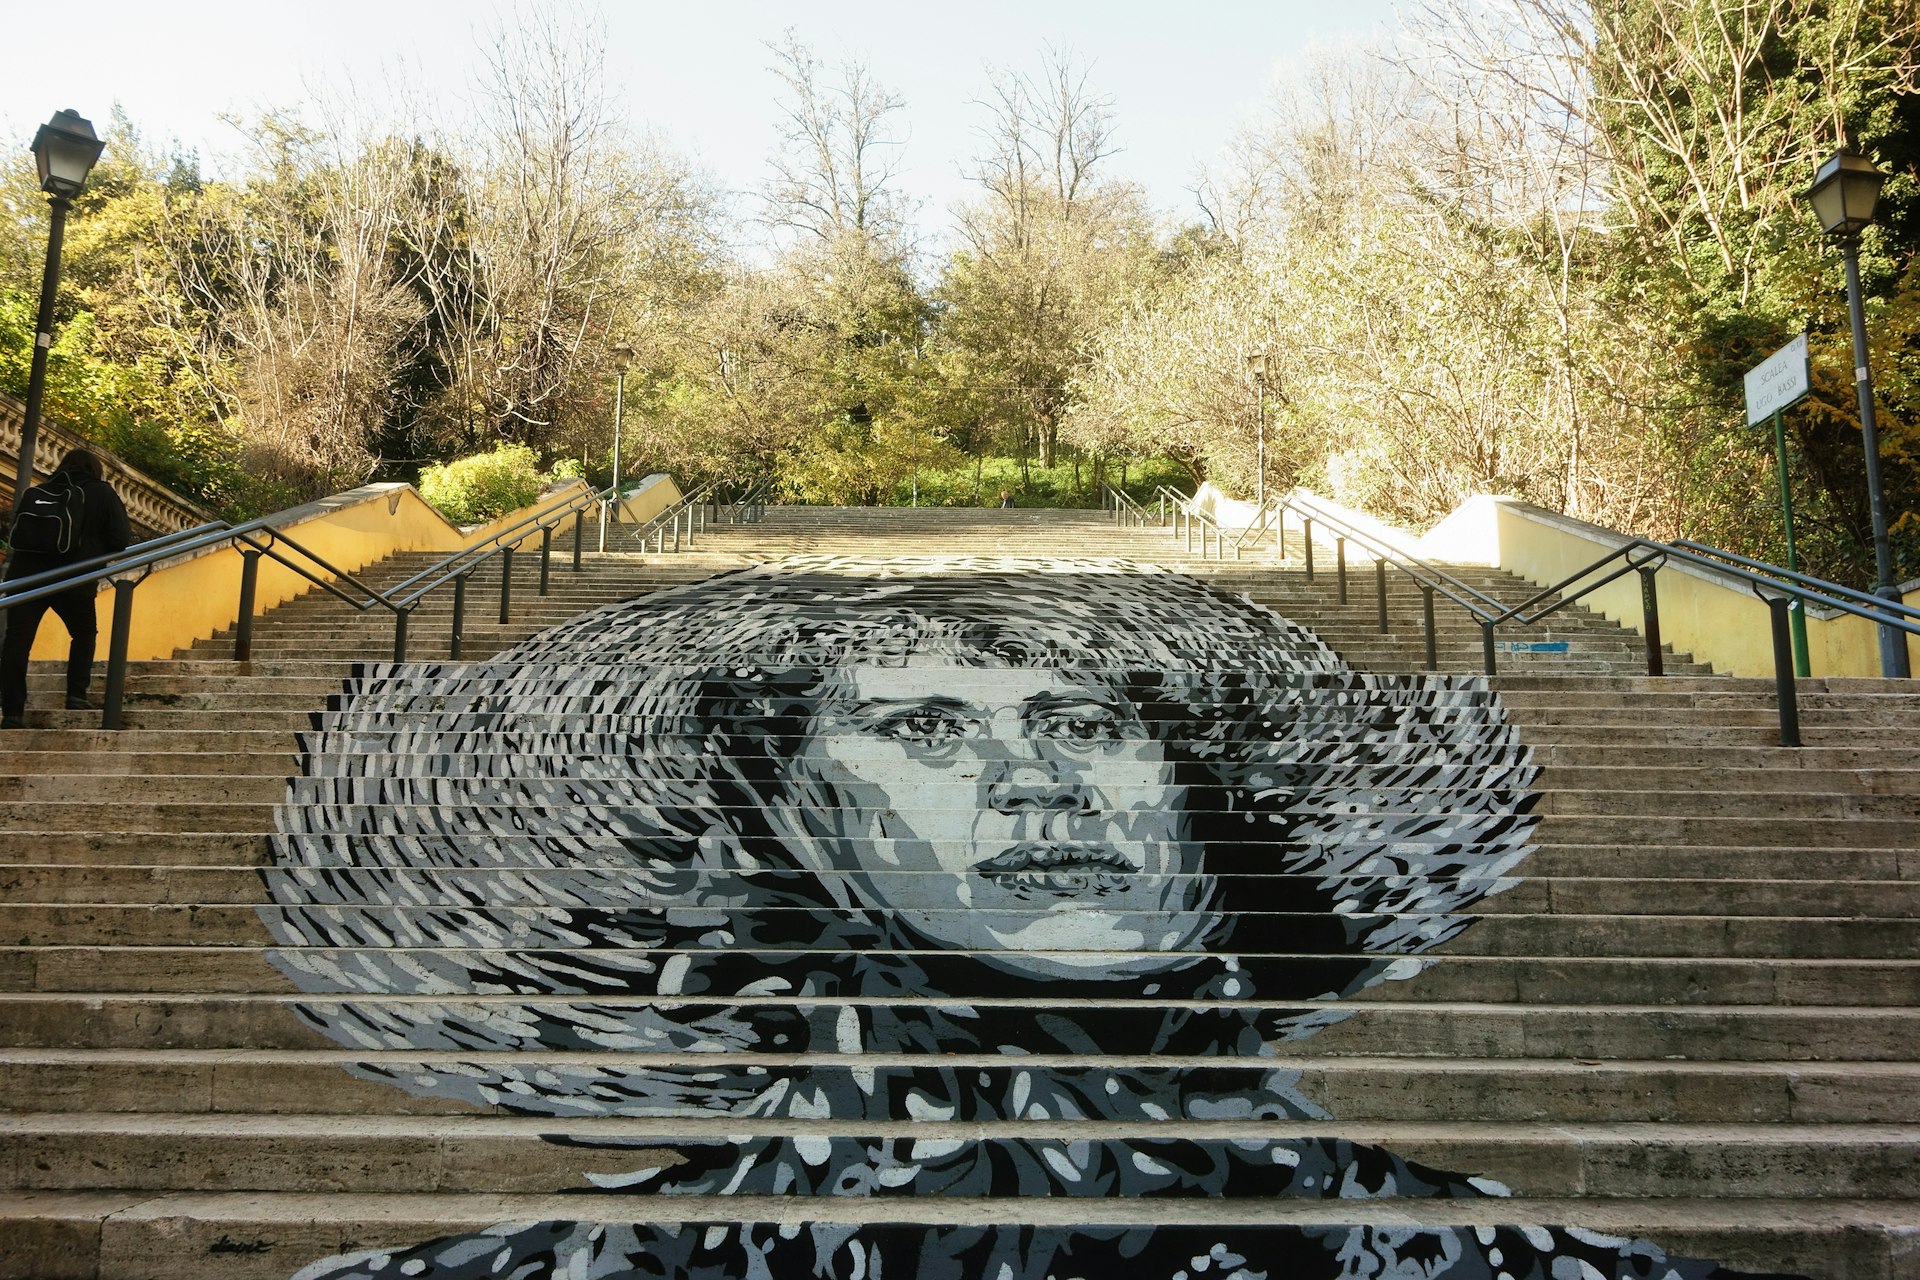 The work of the Italian street artist David Diava Vecchiato on the stairs in via Ugo Bassi